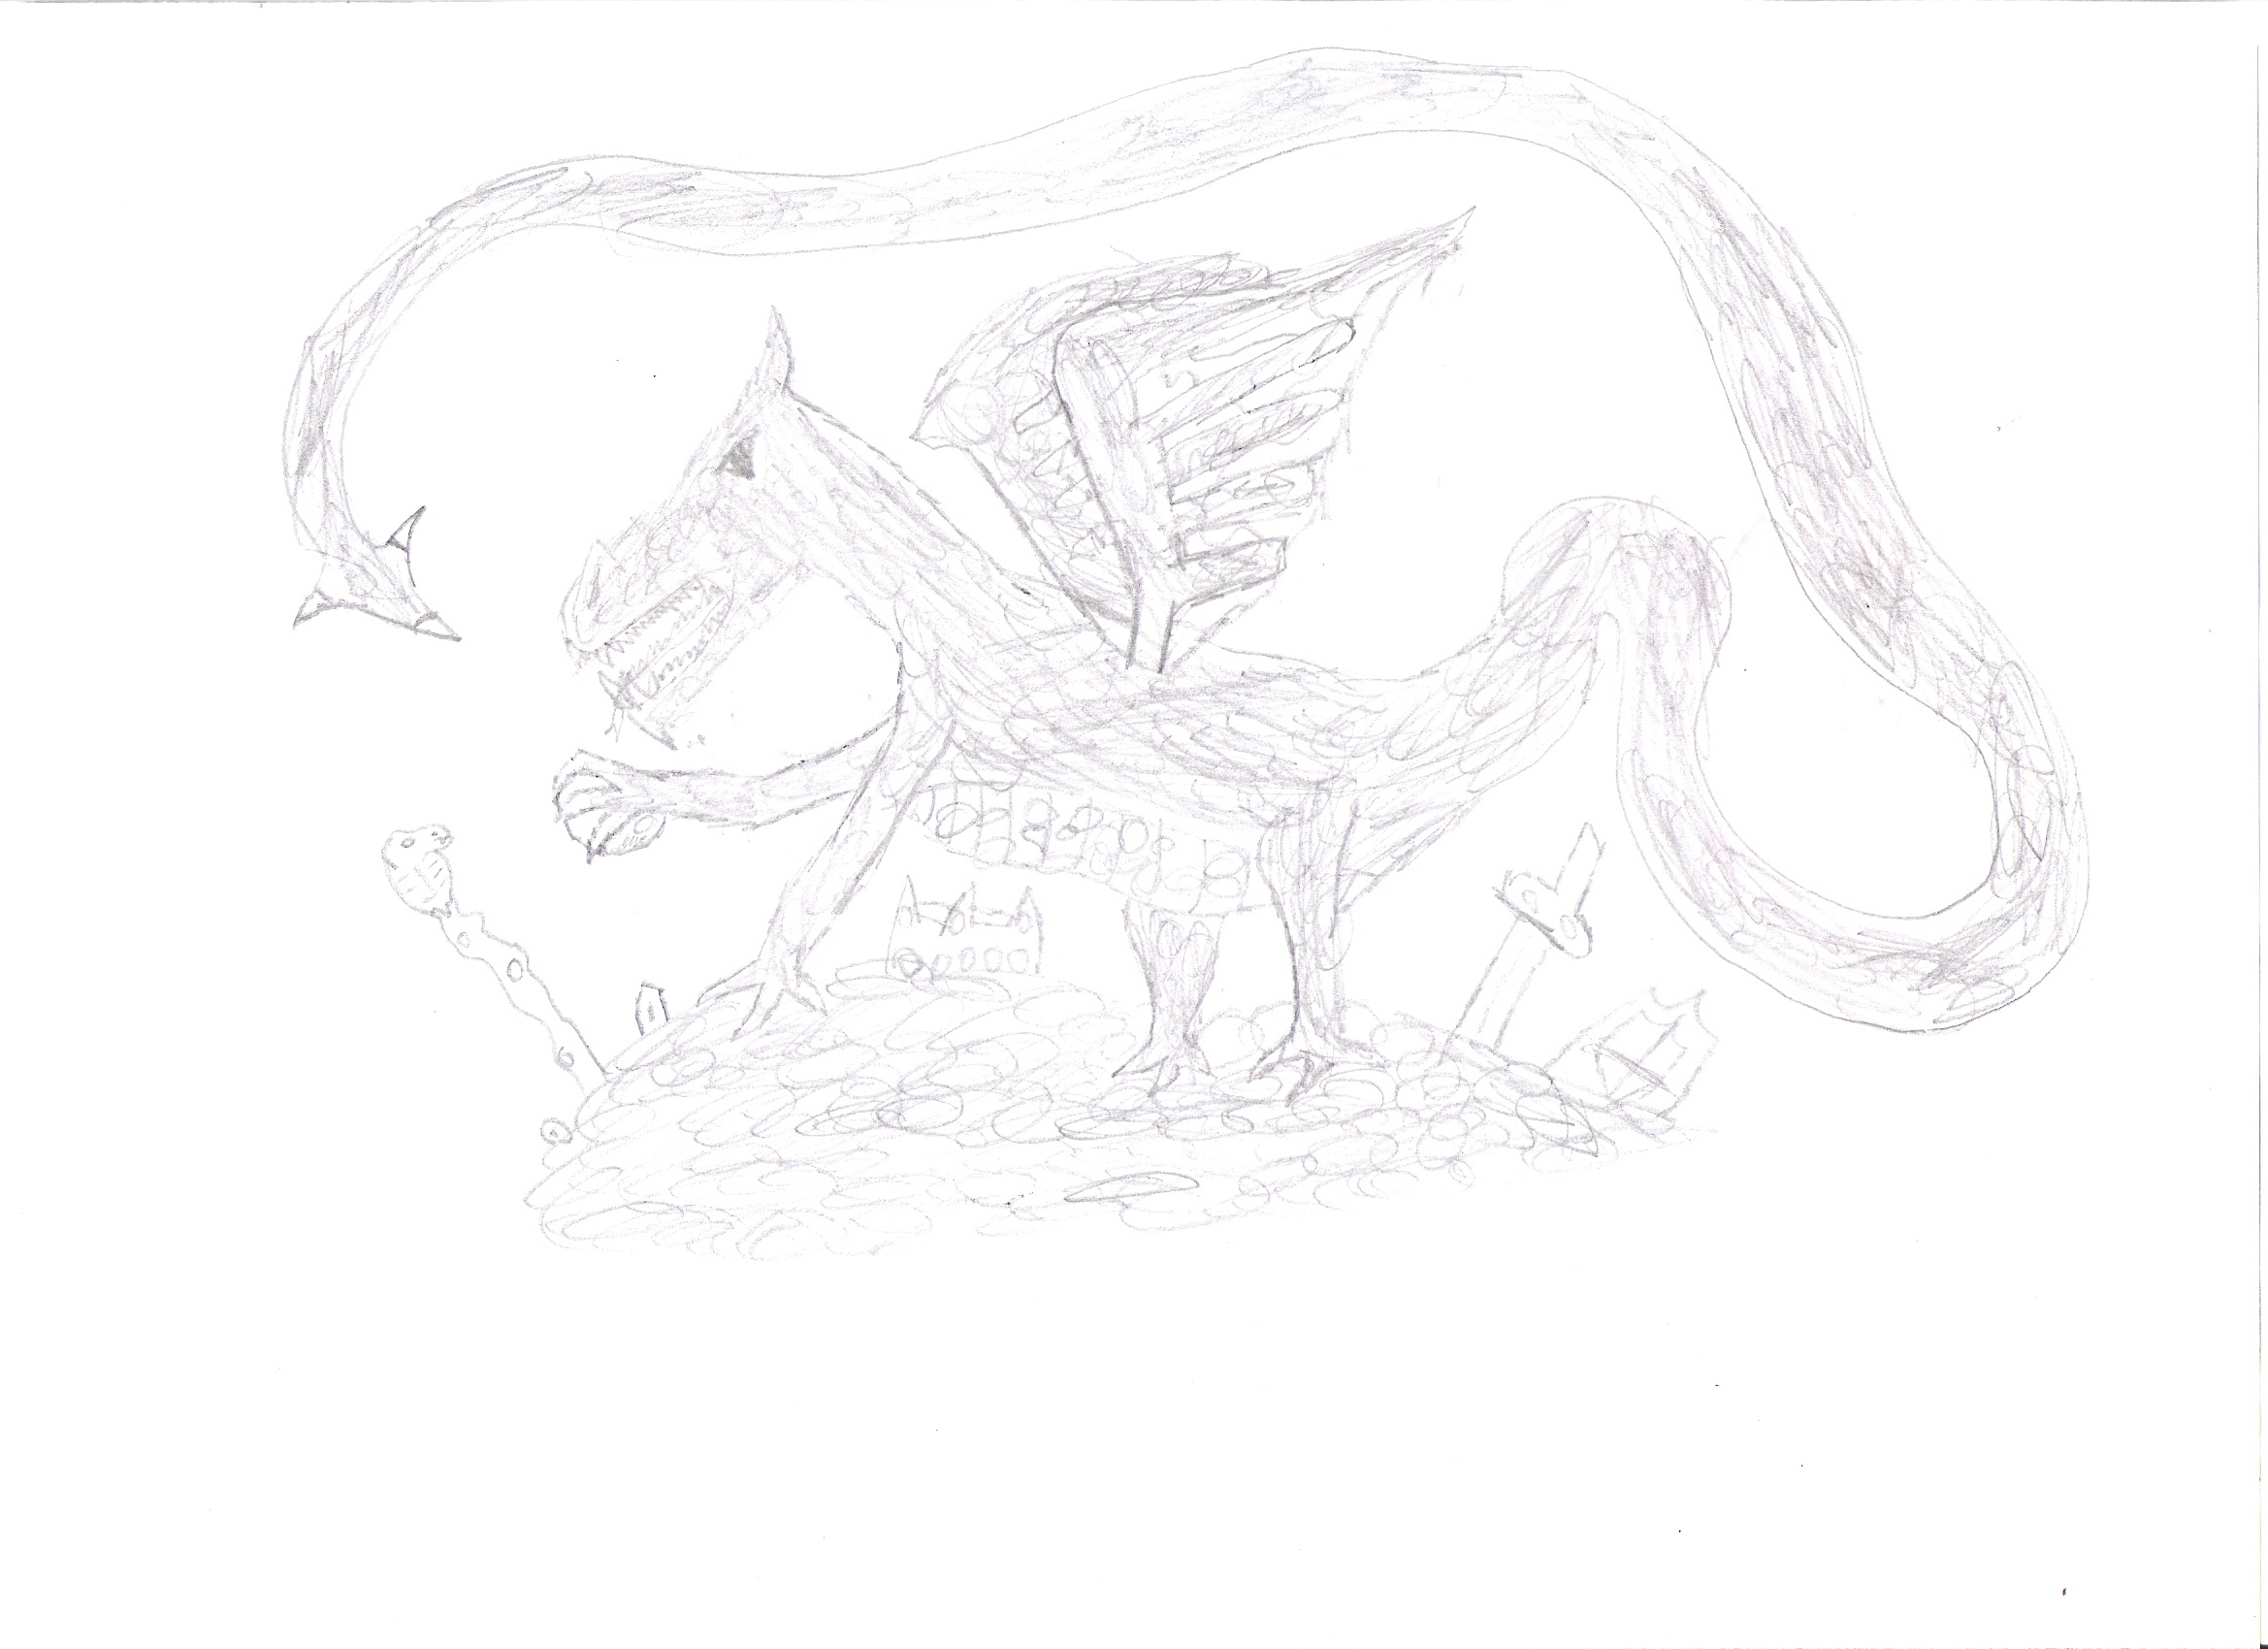 Stormat-dragon by ripple